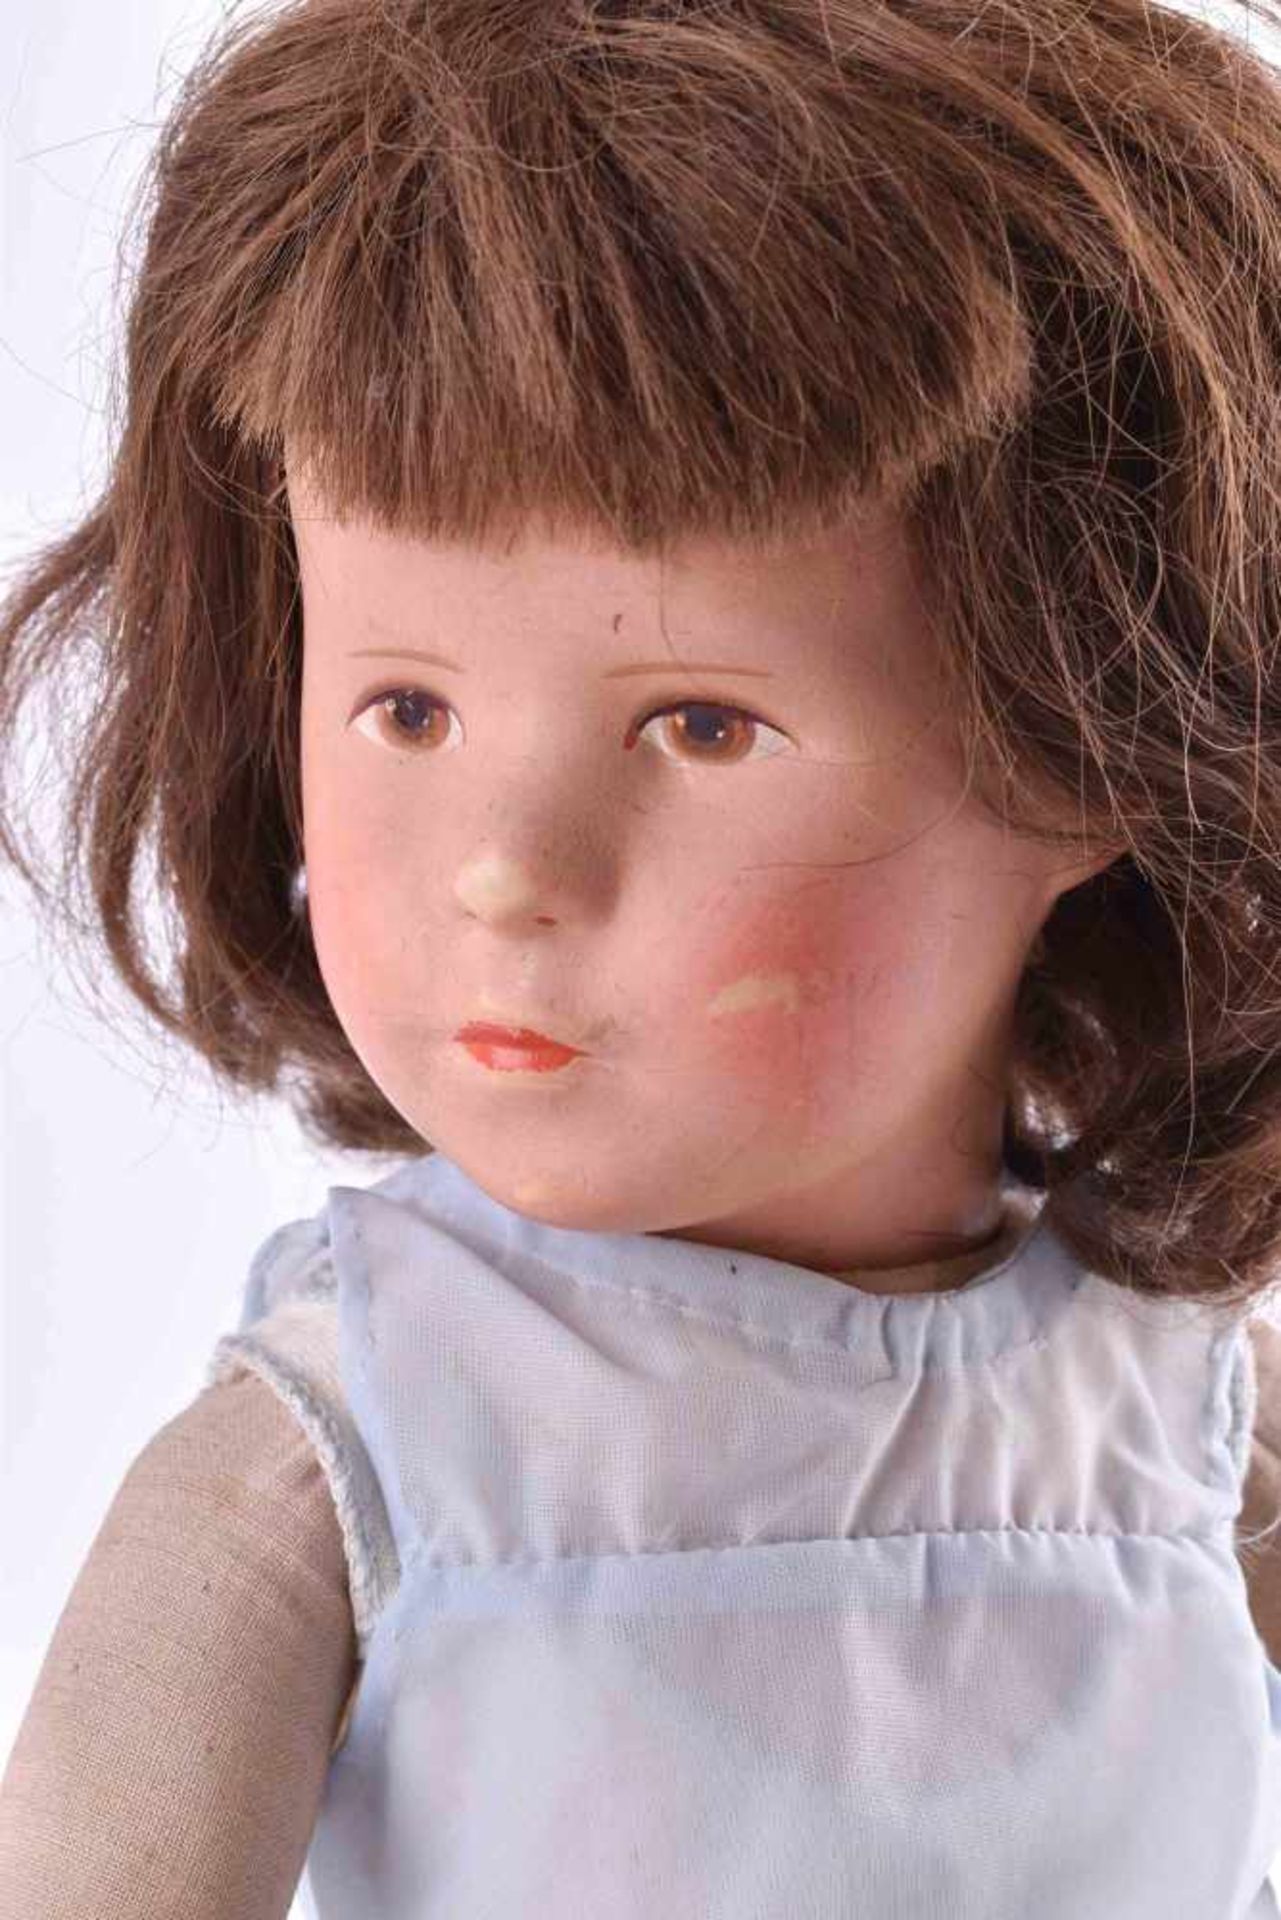 Käthe Kruse Puppe Nr. 33751guter Zustand, H: ca. 50 cmKäthe Kruse doll number 33751good condition, - Bild 3 aus 5